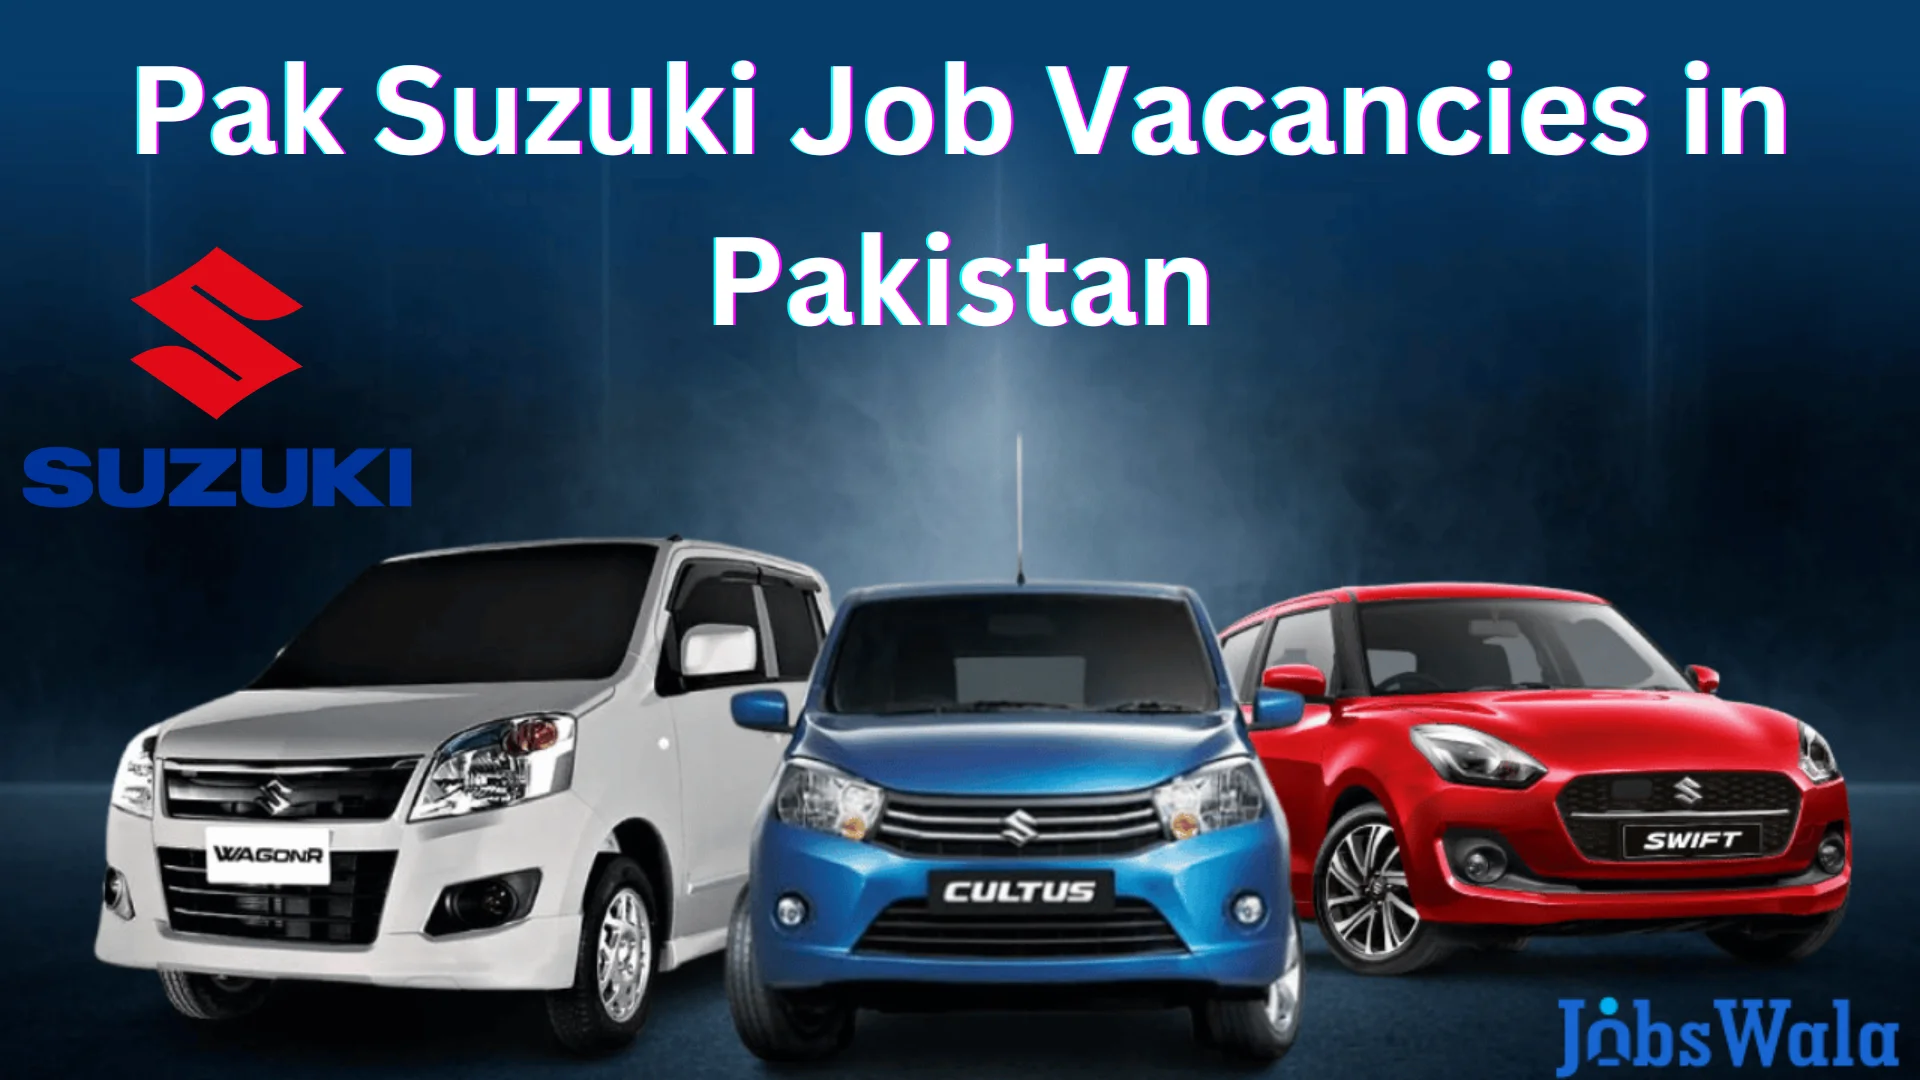 Pak Suzuki Job Vacancies in Pakistan